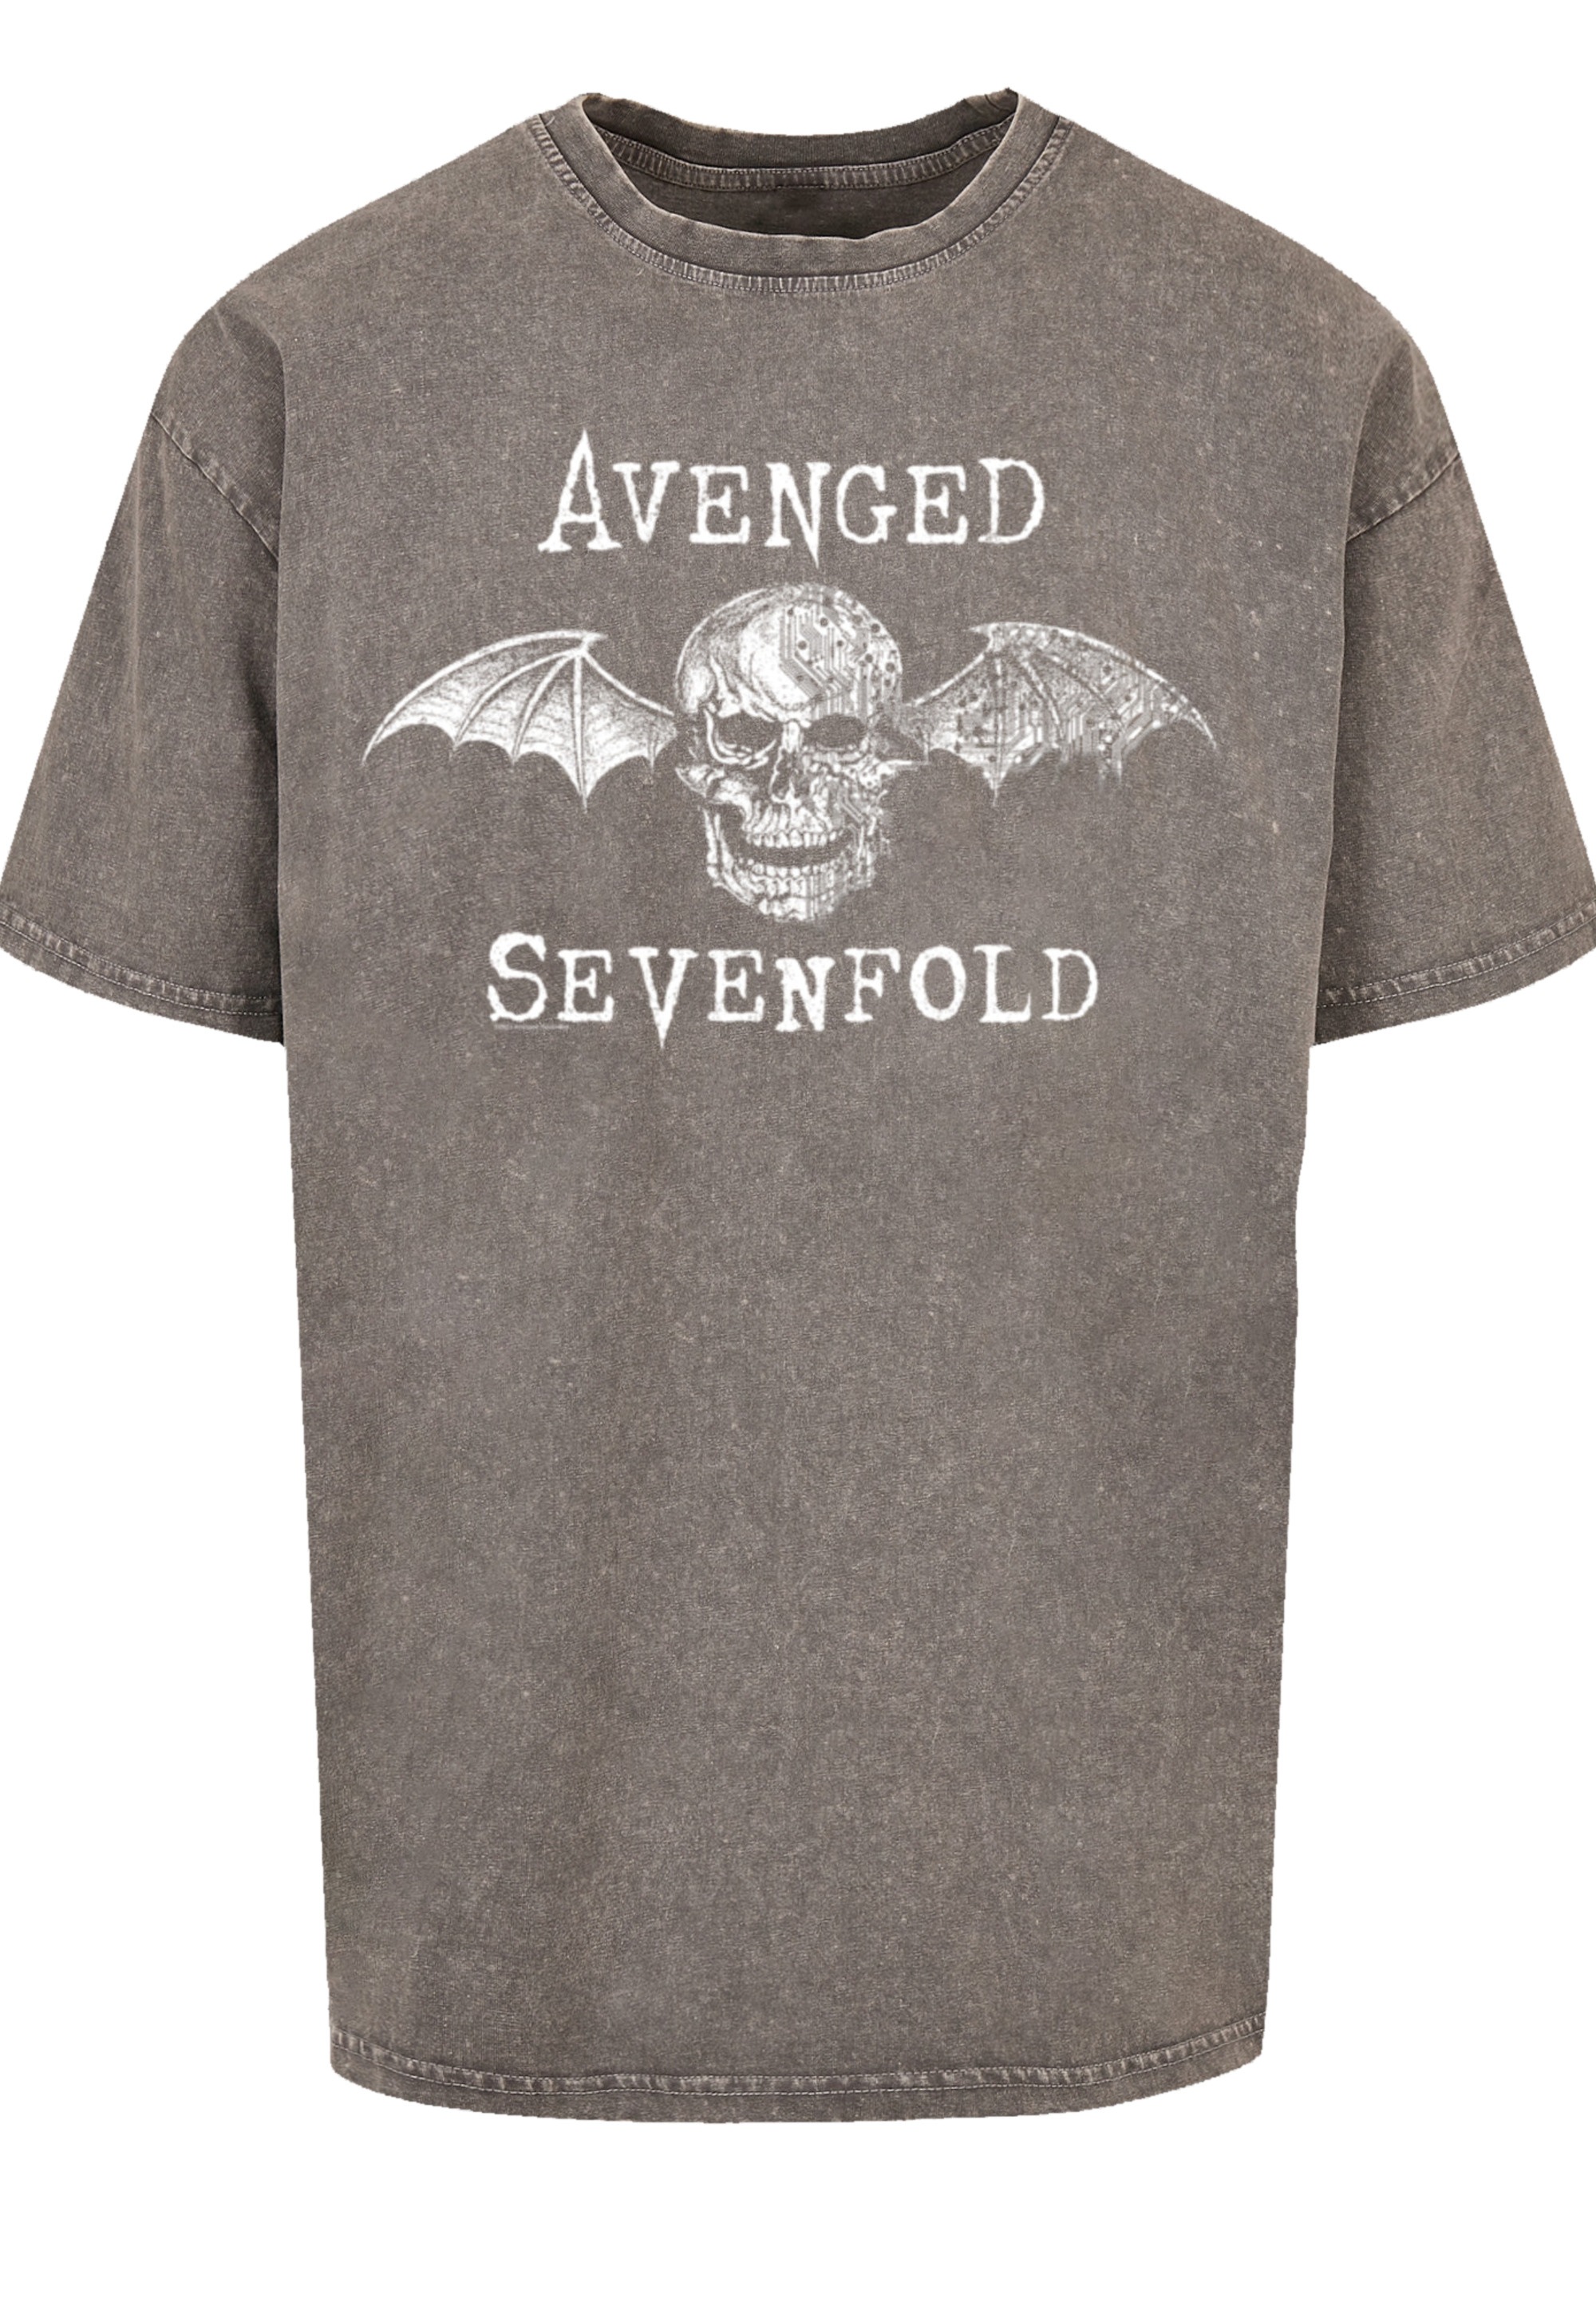 Band, BAUR »Avenged Band Bat«, Premium | Rock-Musik T-Shirt ▷ Qualität, Cyborg Metal Rock F4NT4STIC für Sevenfold